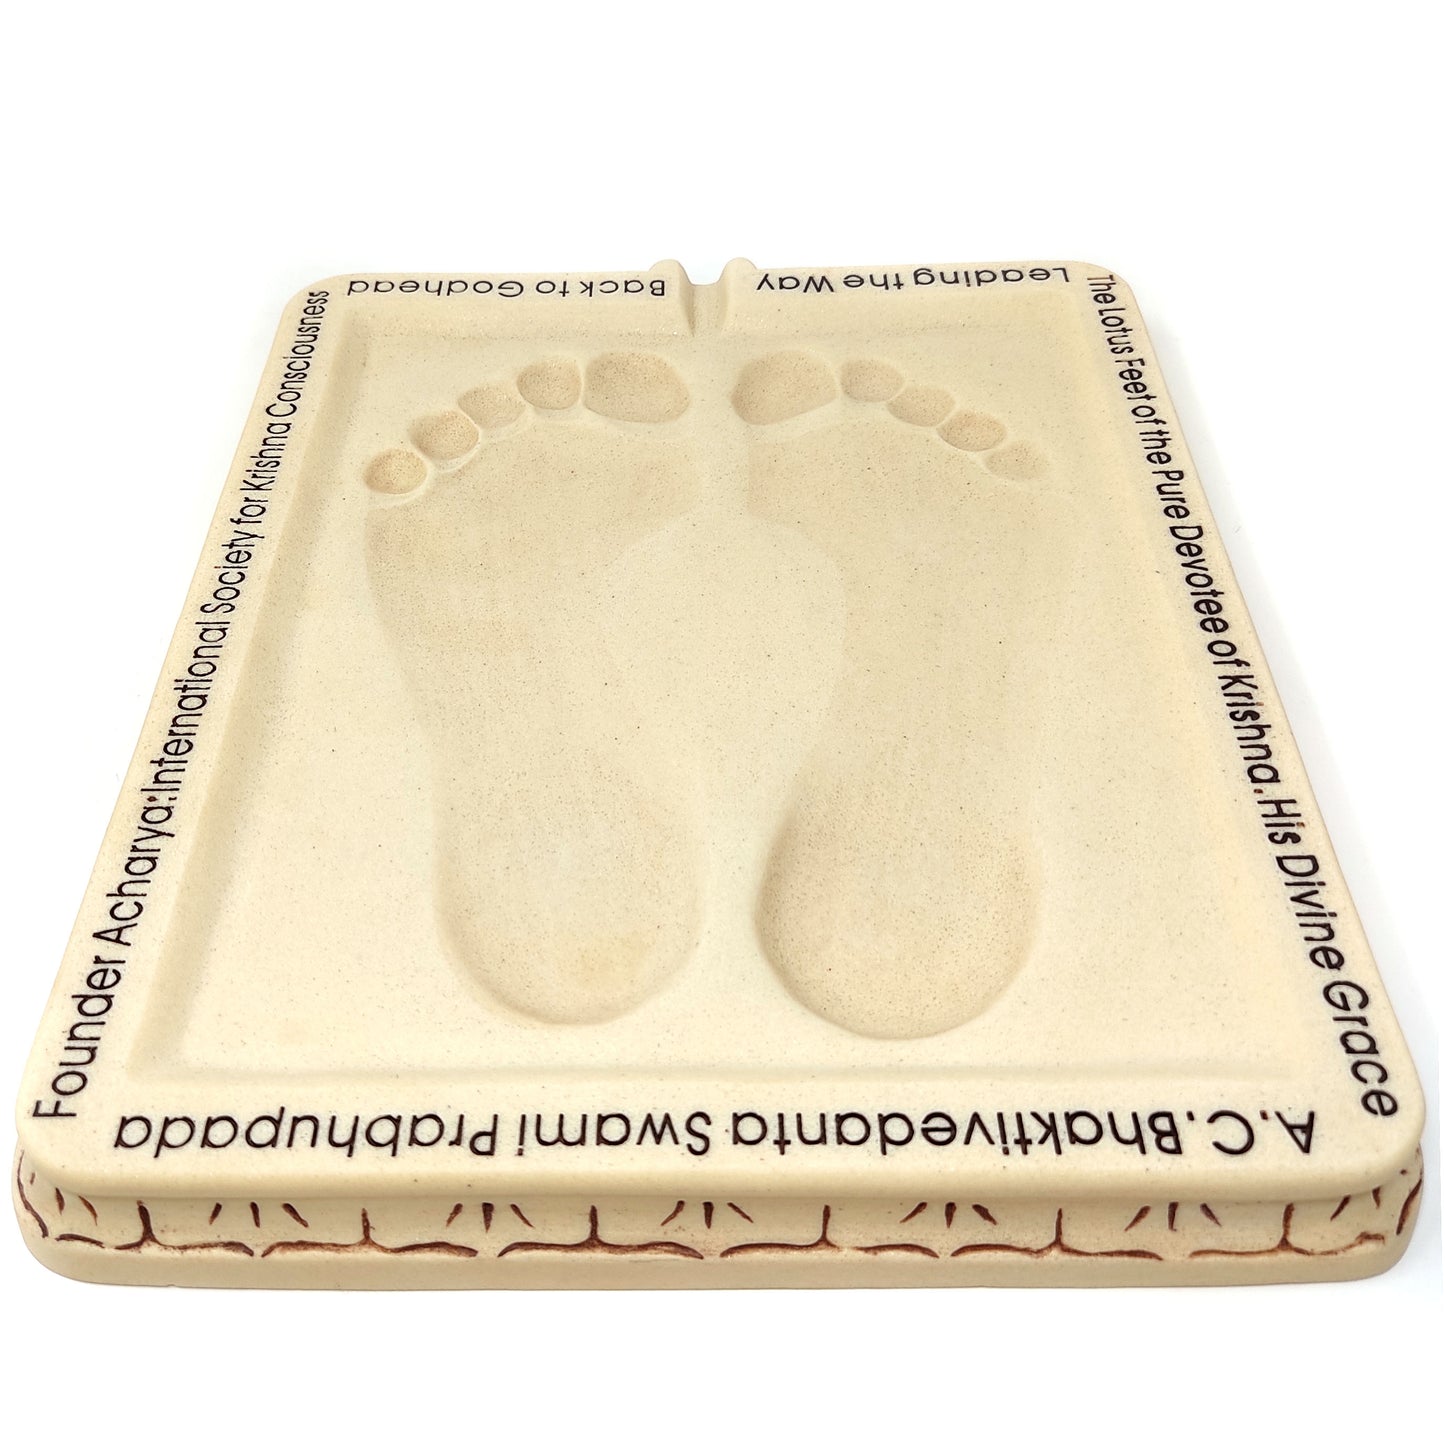 Bhaktivedanta Swami Srila Prabhupada's Lotus Feet Impression Casting 13" Long